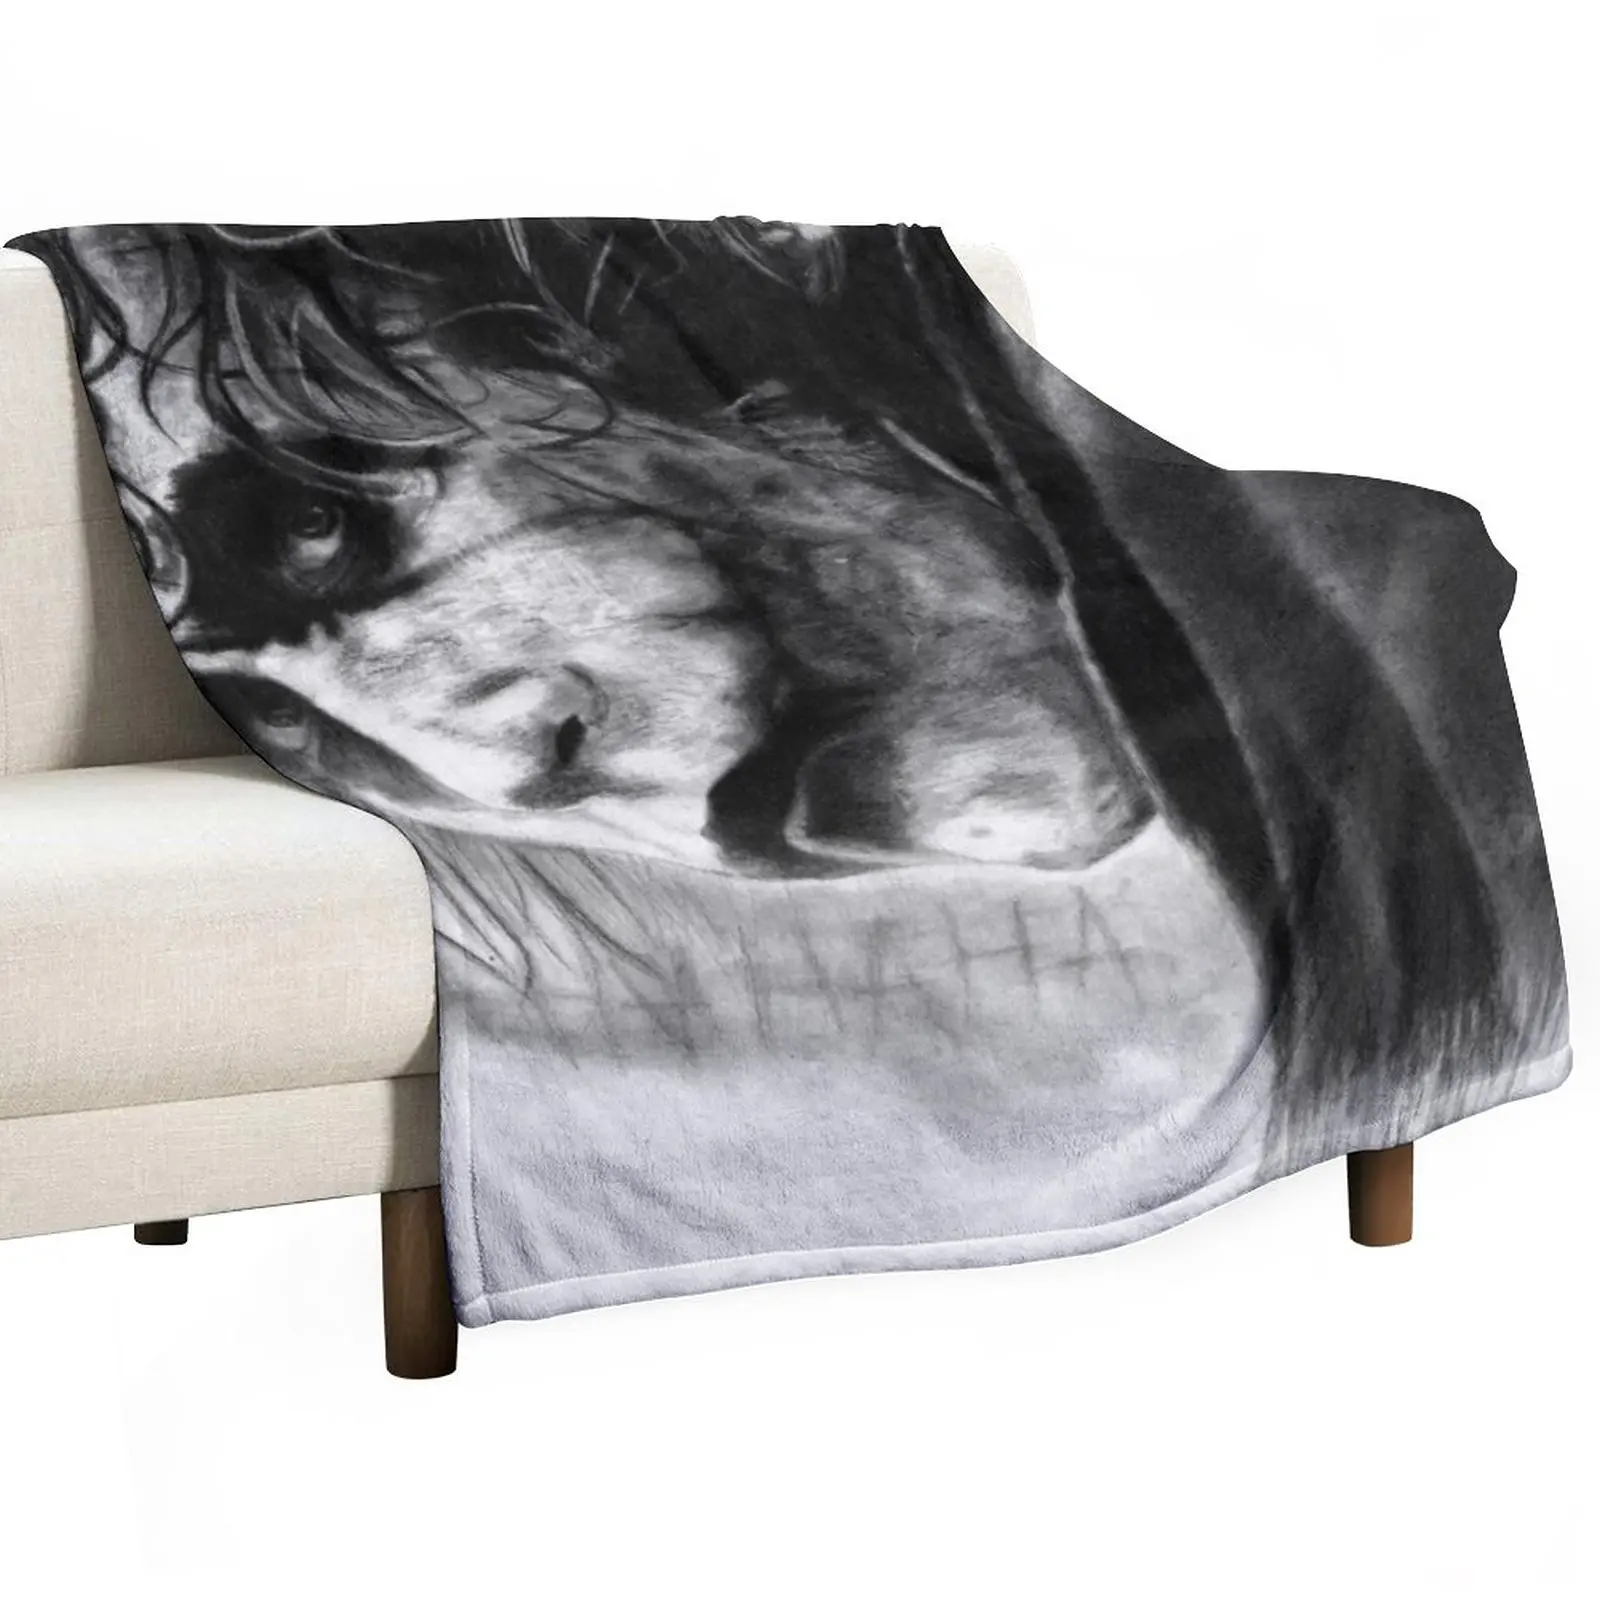 

Heath Ledger Throw Blanket Soft Plaid Fashion Sofa Blankets